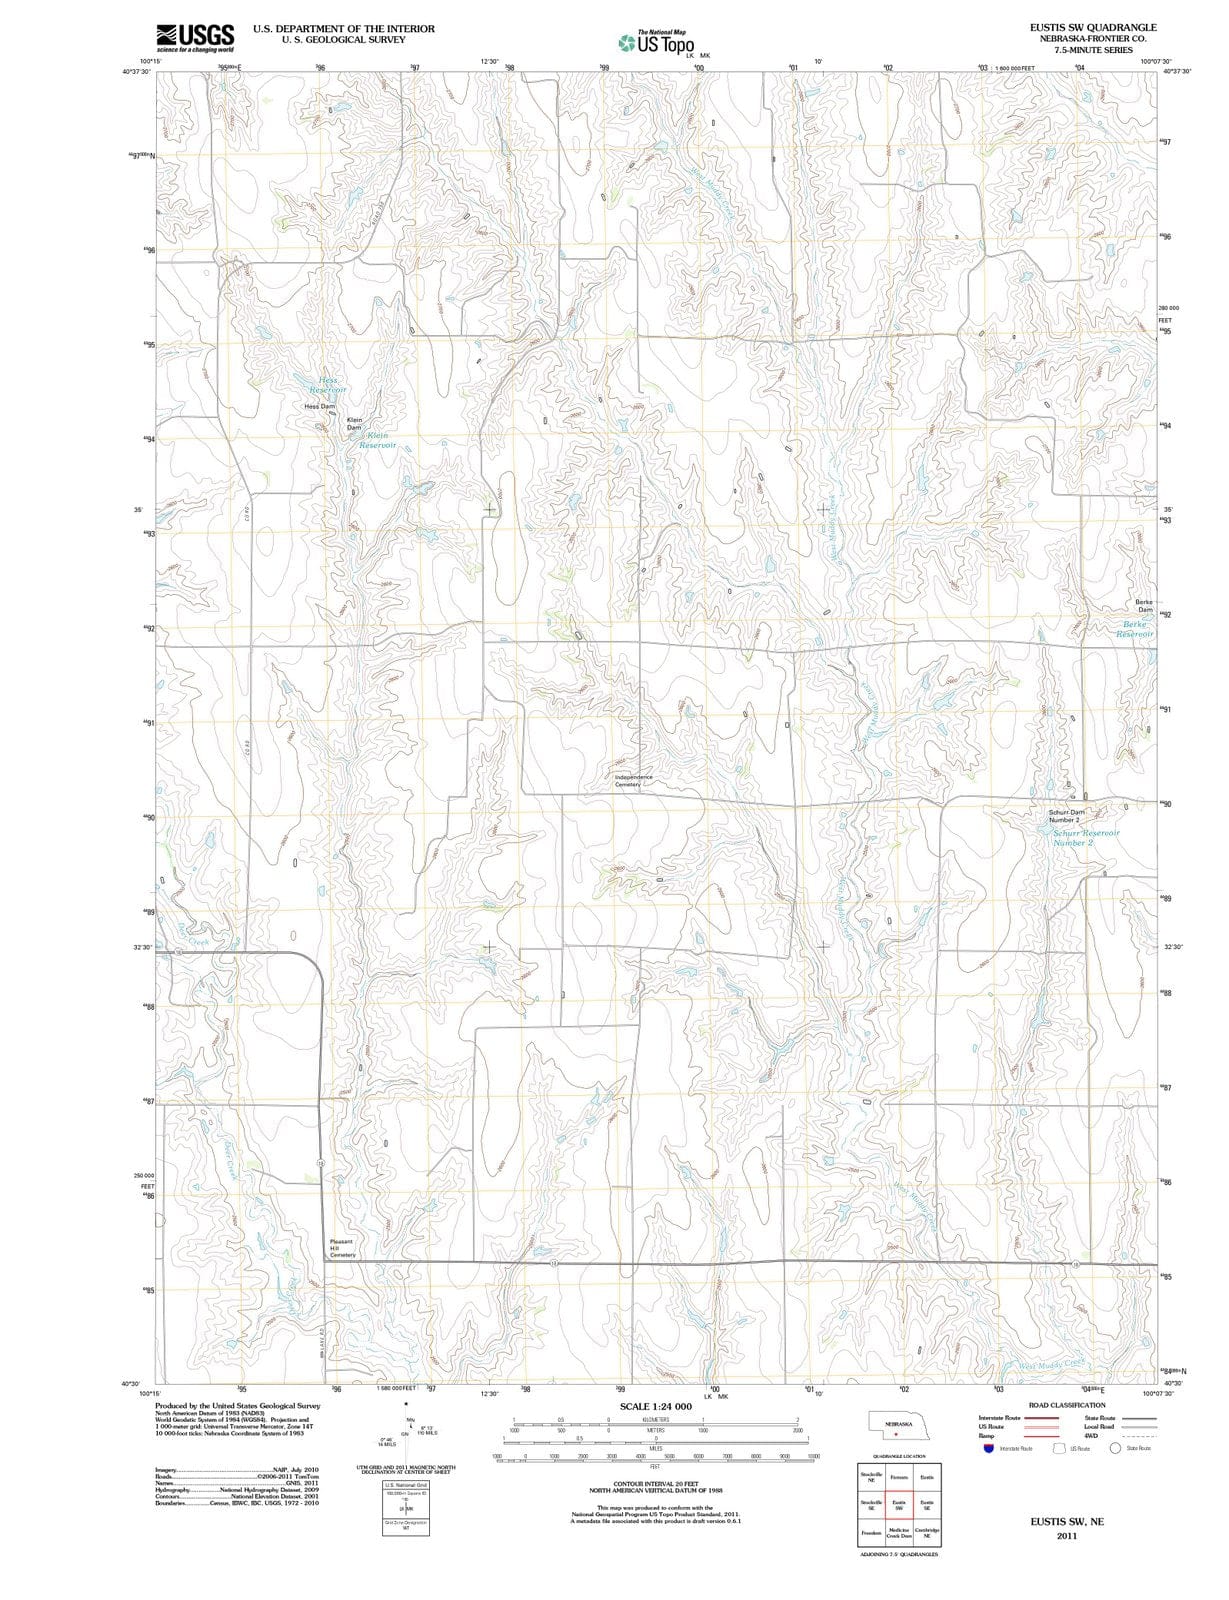 2011 Eustis, NE - Nebraska - USGS Topographic Map v2